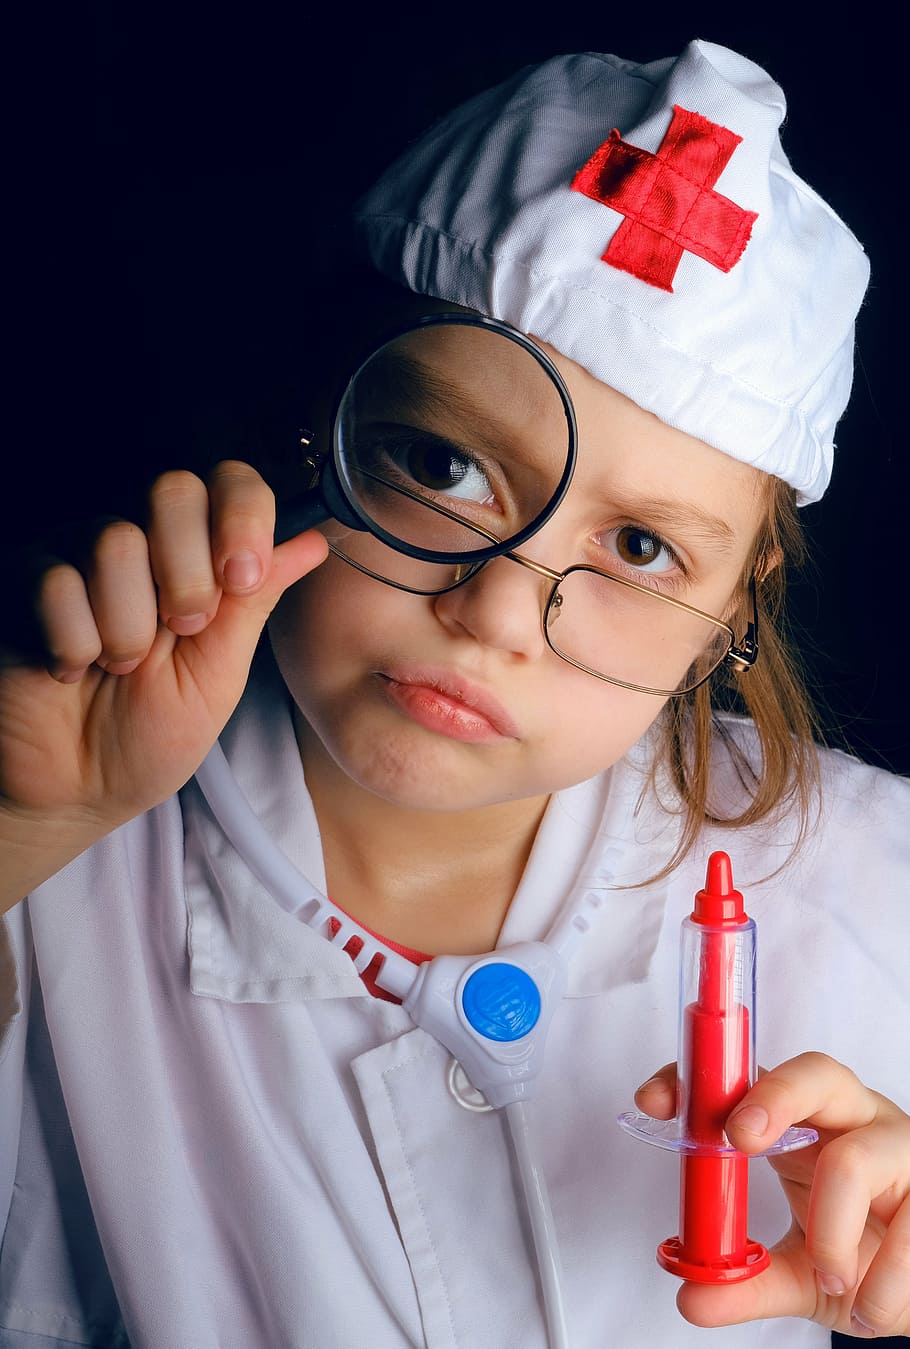 child wearing doctor costume holding syringe toy, ambulance, students, HD wallpaper